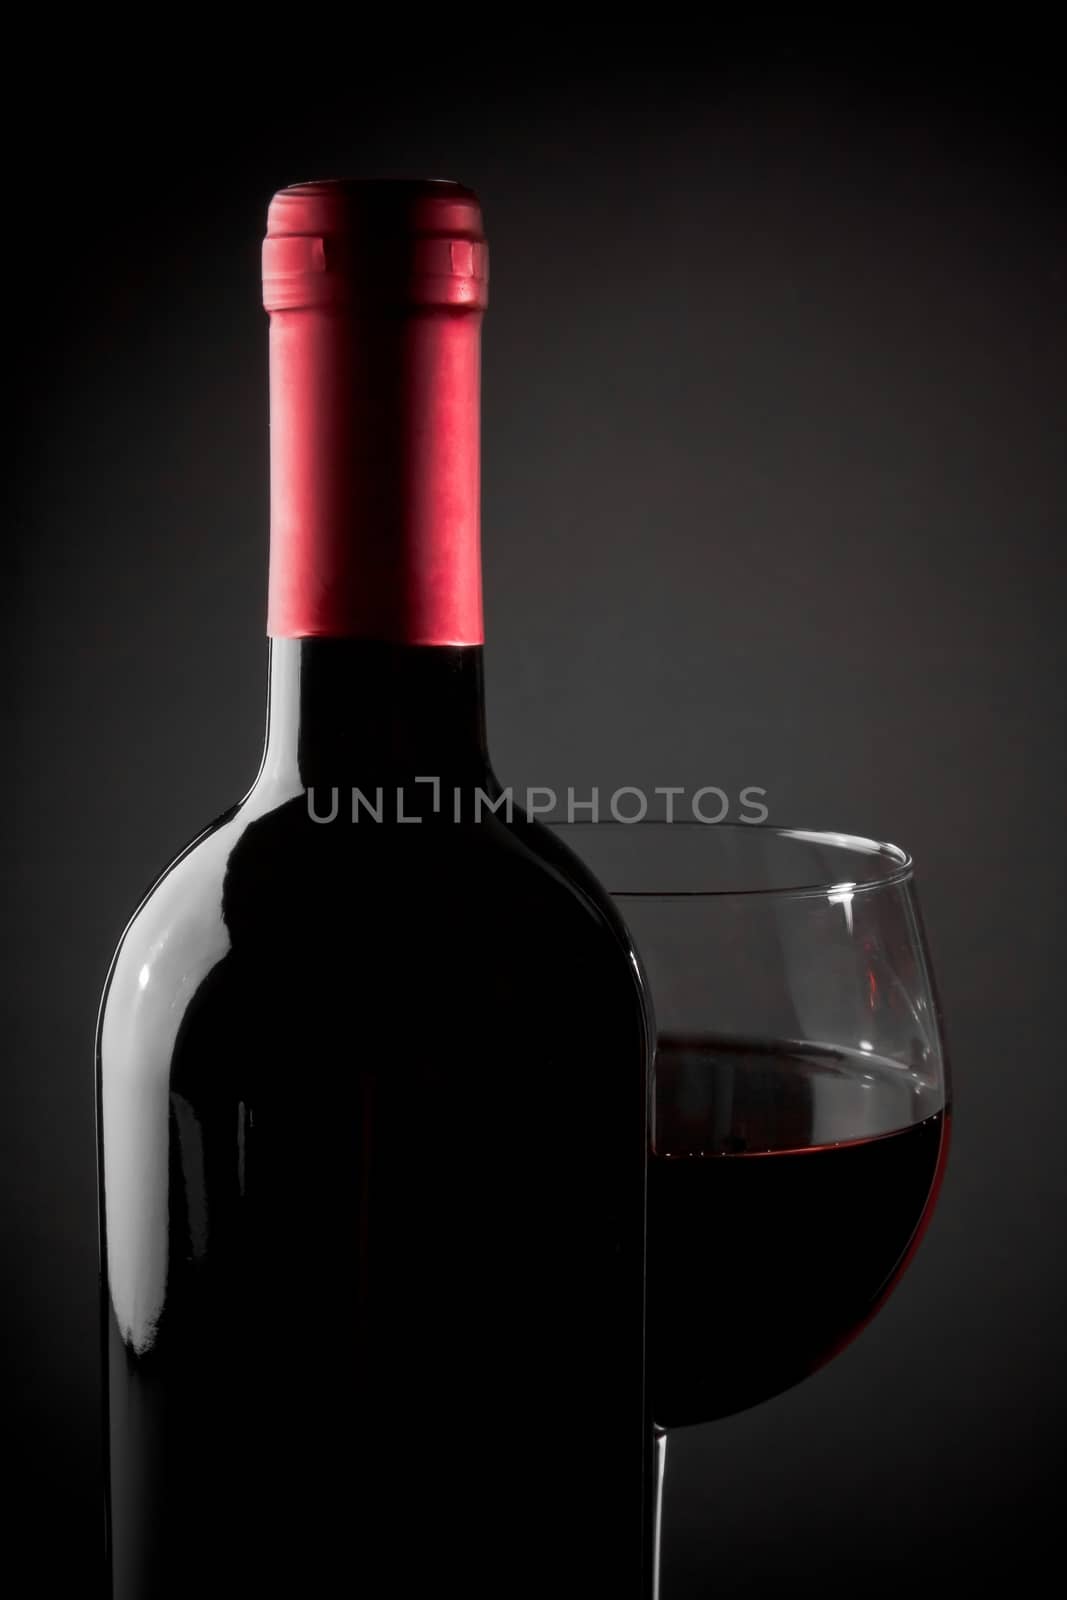 red wine glass near bottle on grey background